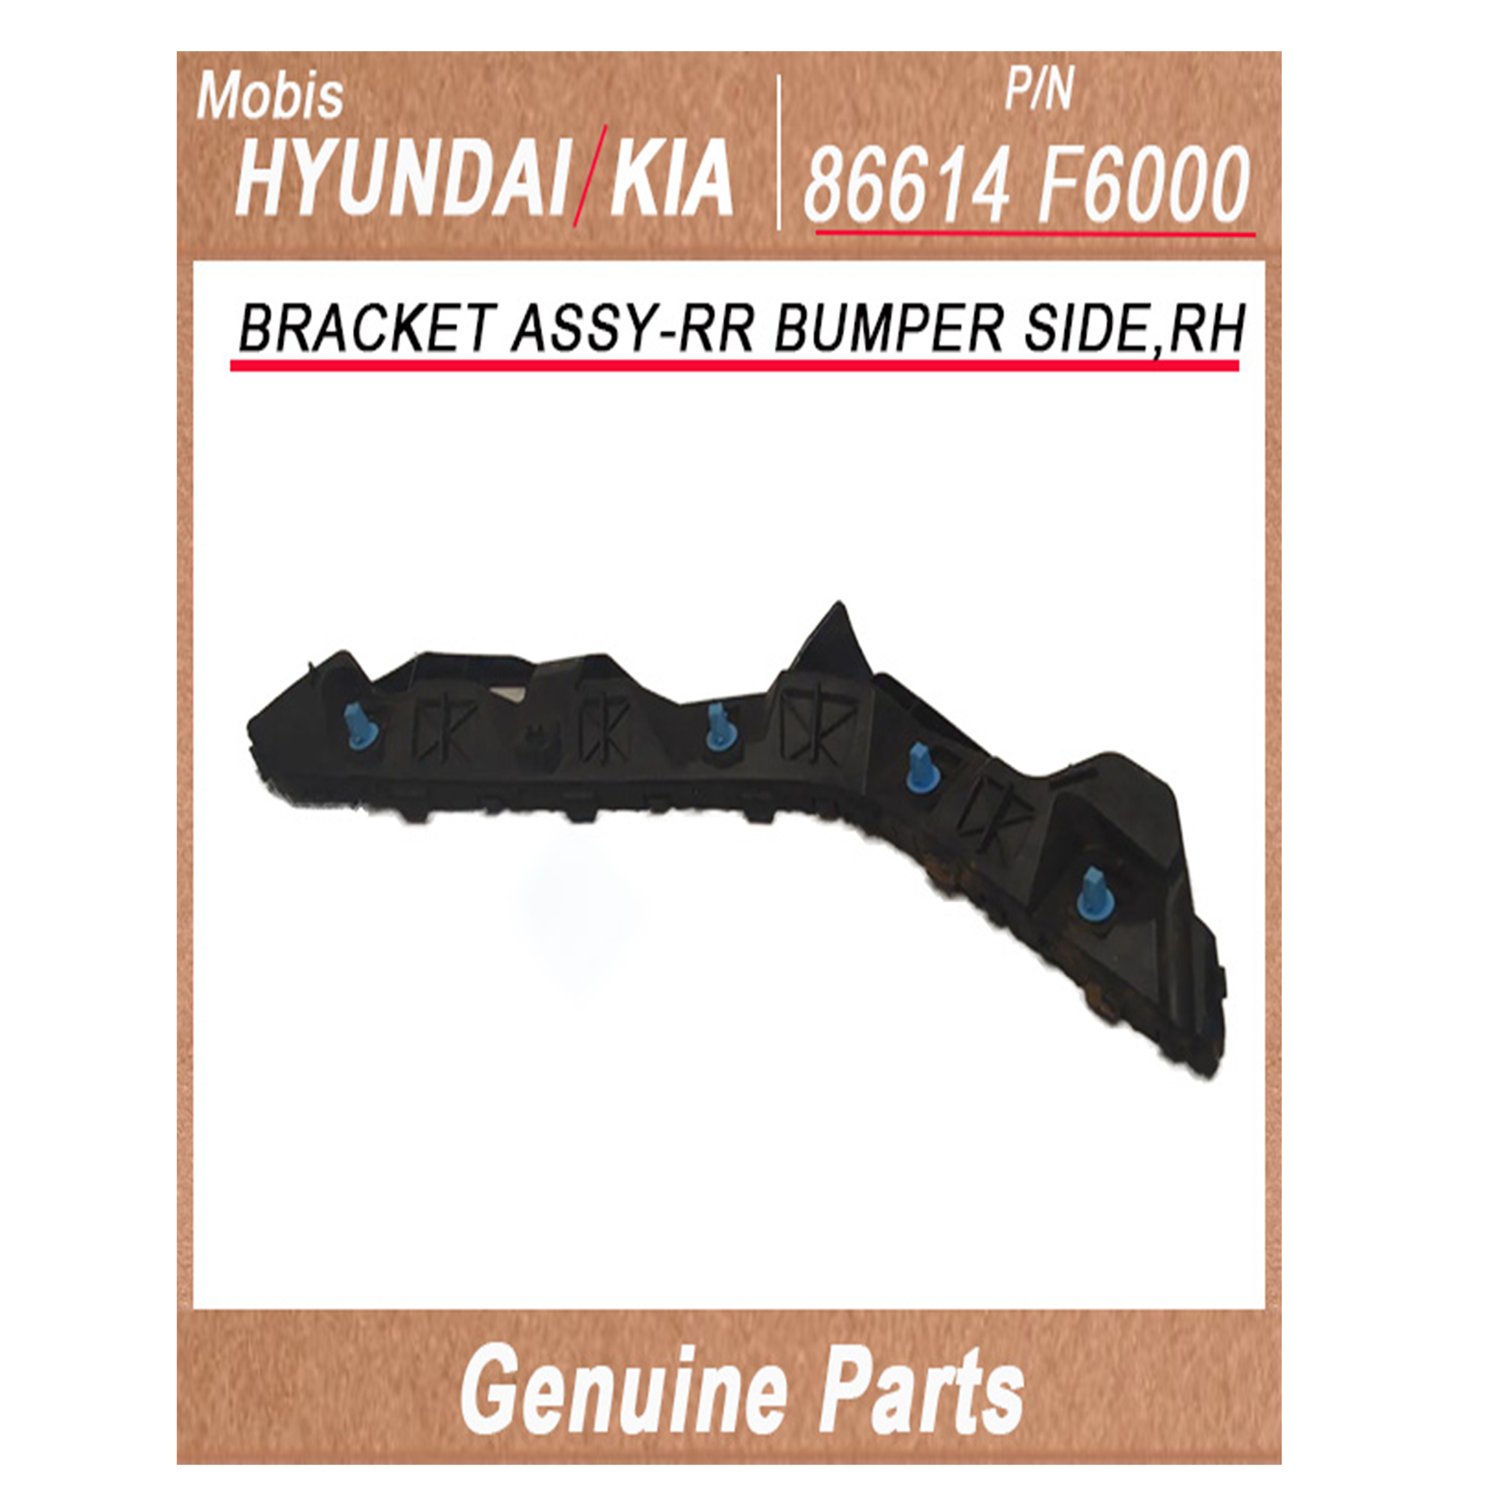 86614F6000 _ BRACKET ASSY_RR BUMPER SIDE_RH _ Genuine Korean Automotive Spare Parts _ Hyundai Kia _M